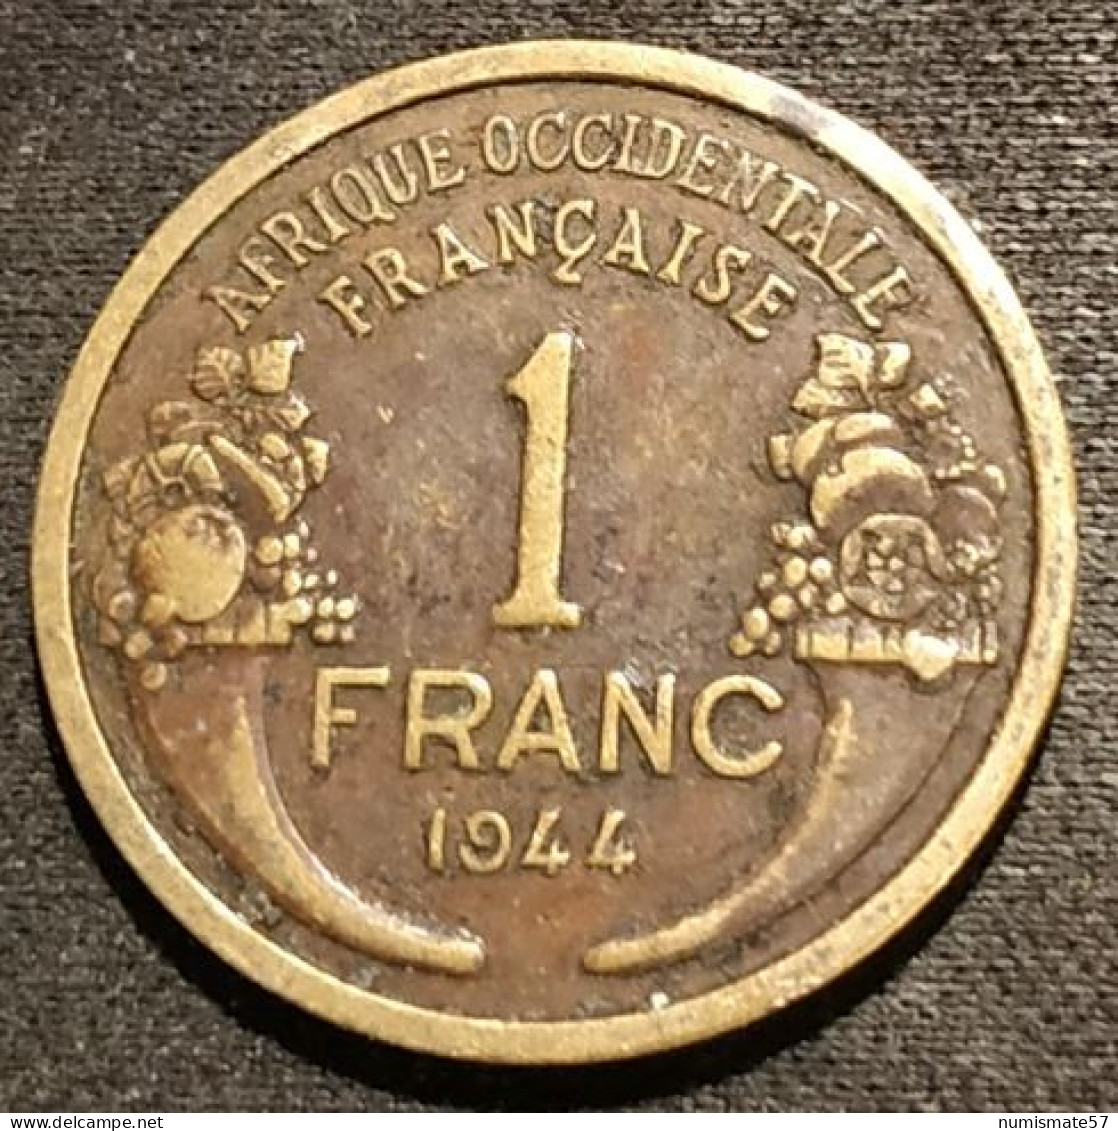 AFRIQUE OCCIDENTALE FRANÇAISE - 1 FRANC 1944 - Morlon - KM 2 - Frans-West-Afrika